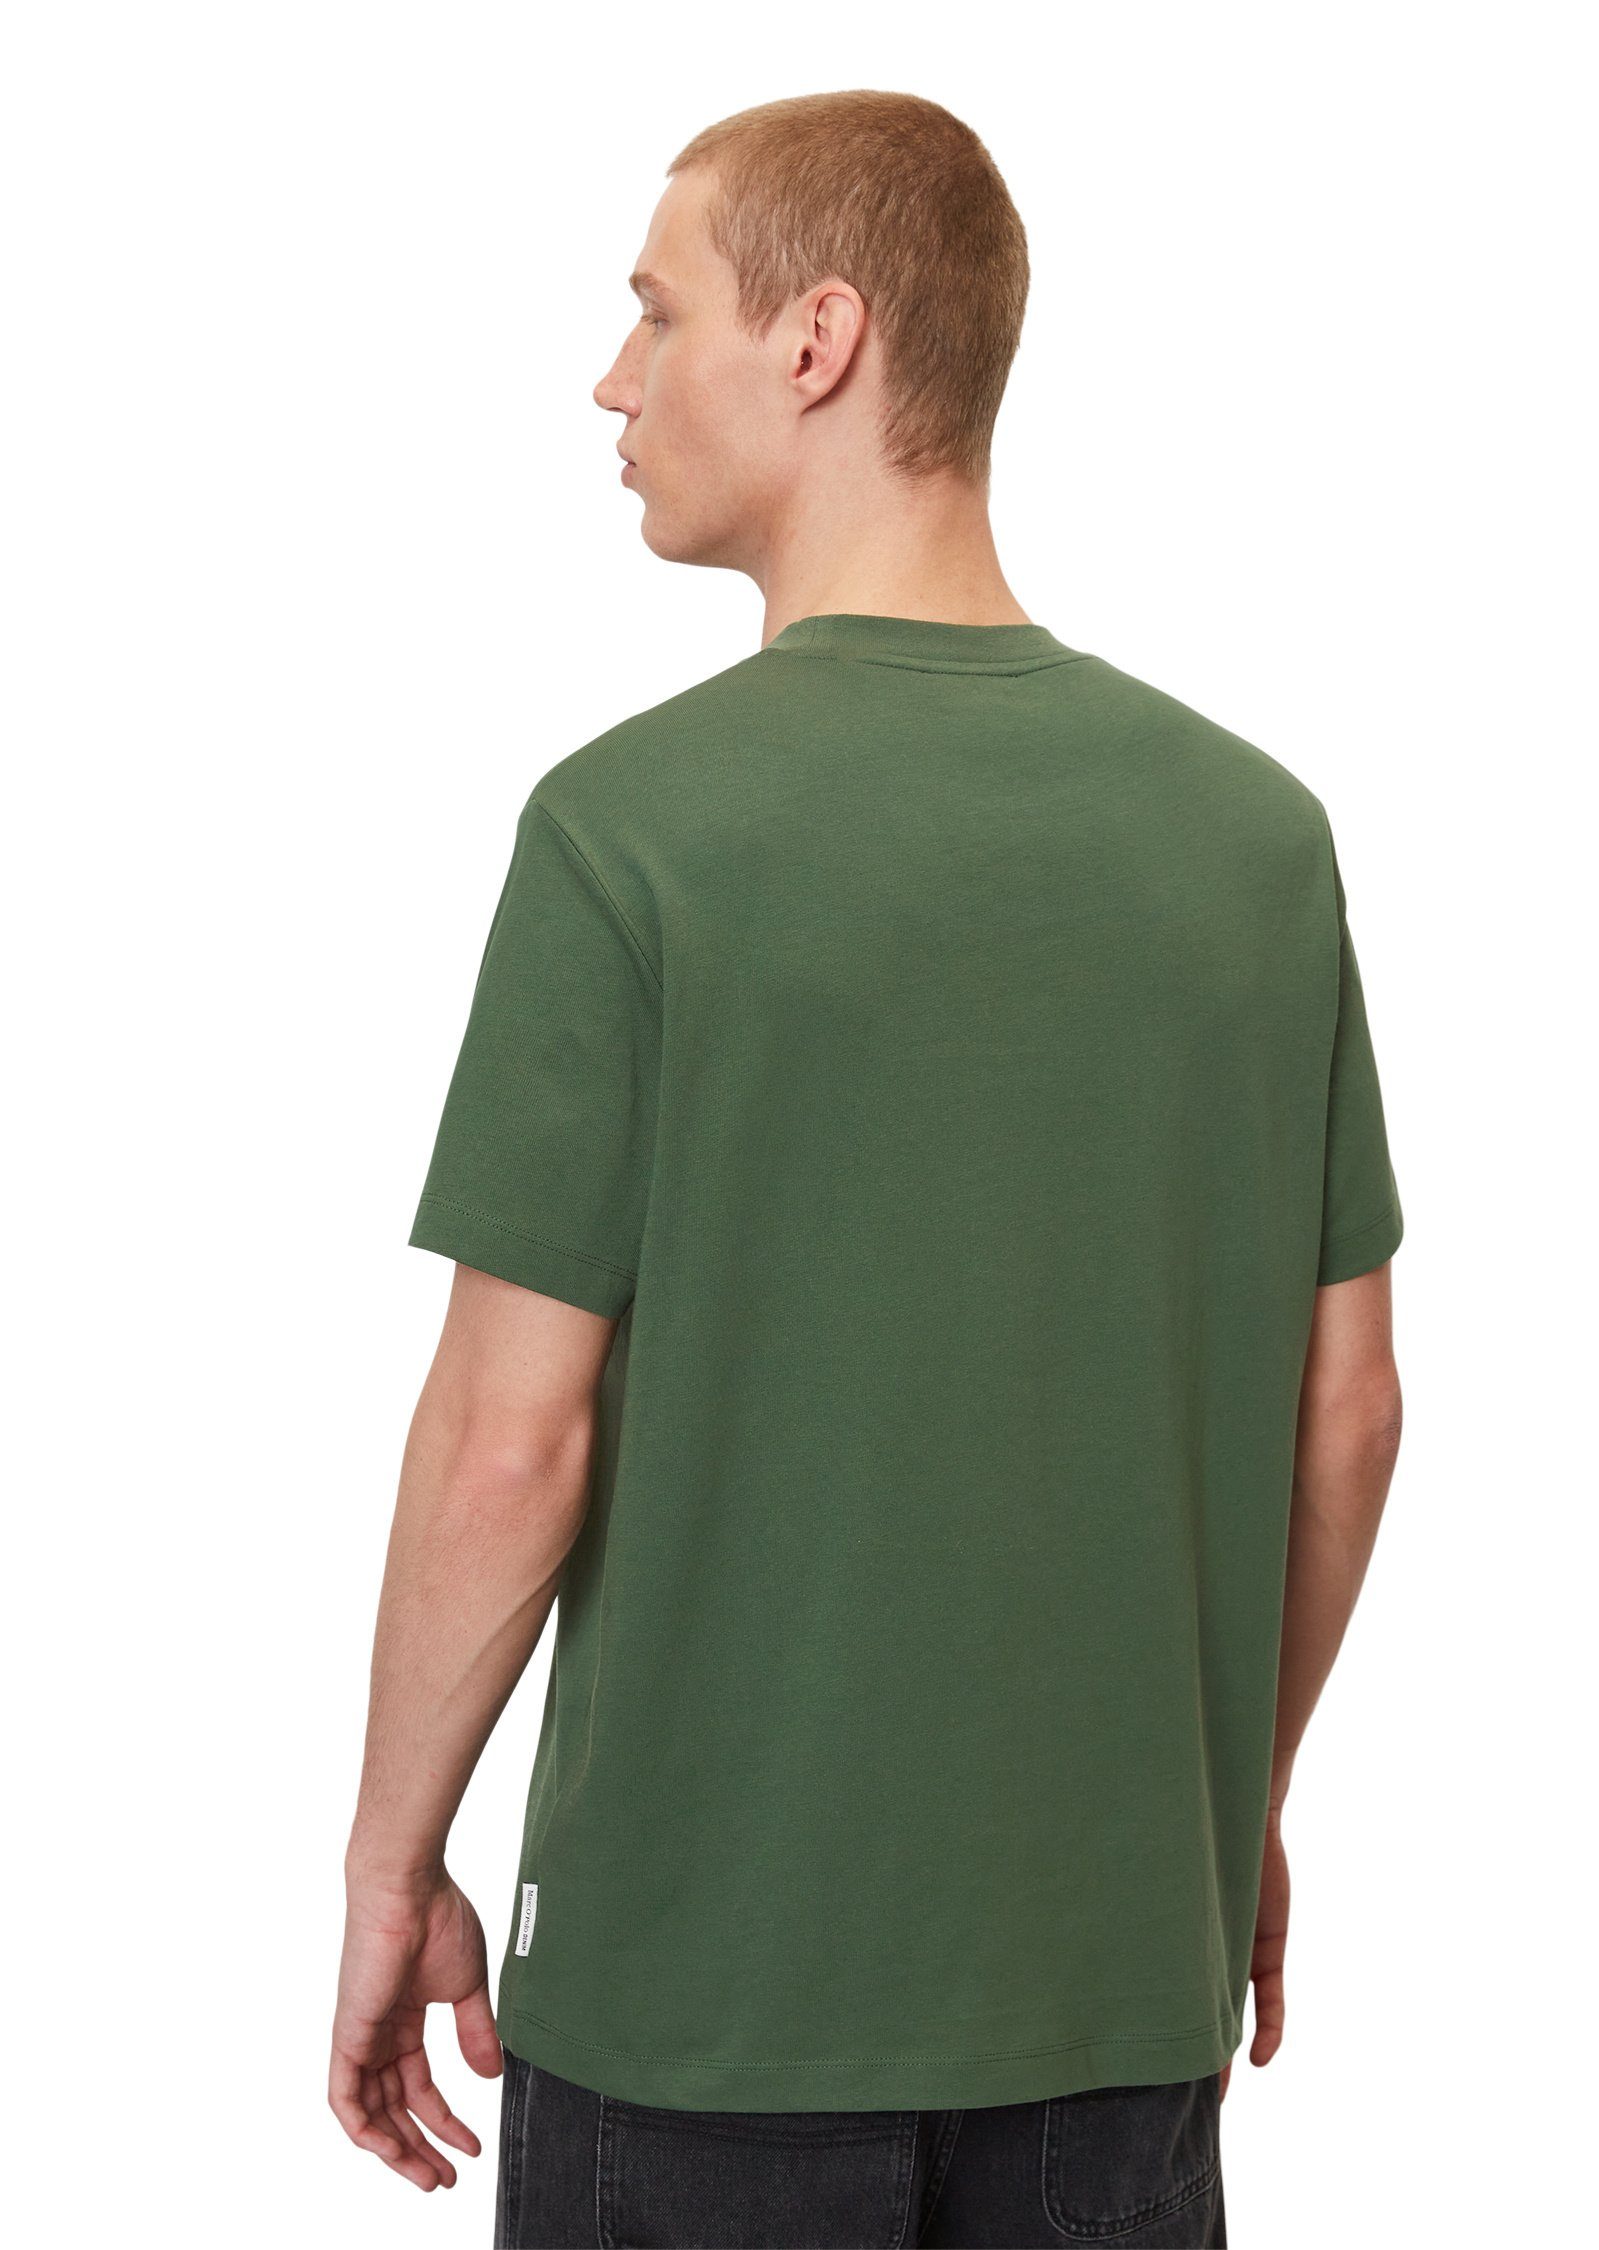 Farbe O'Polo markantem Marc Rückenprint grün nach je DENIM T-Shirt mit